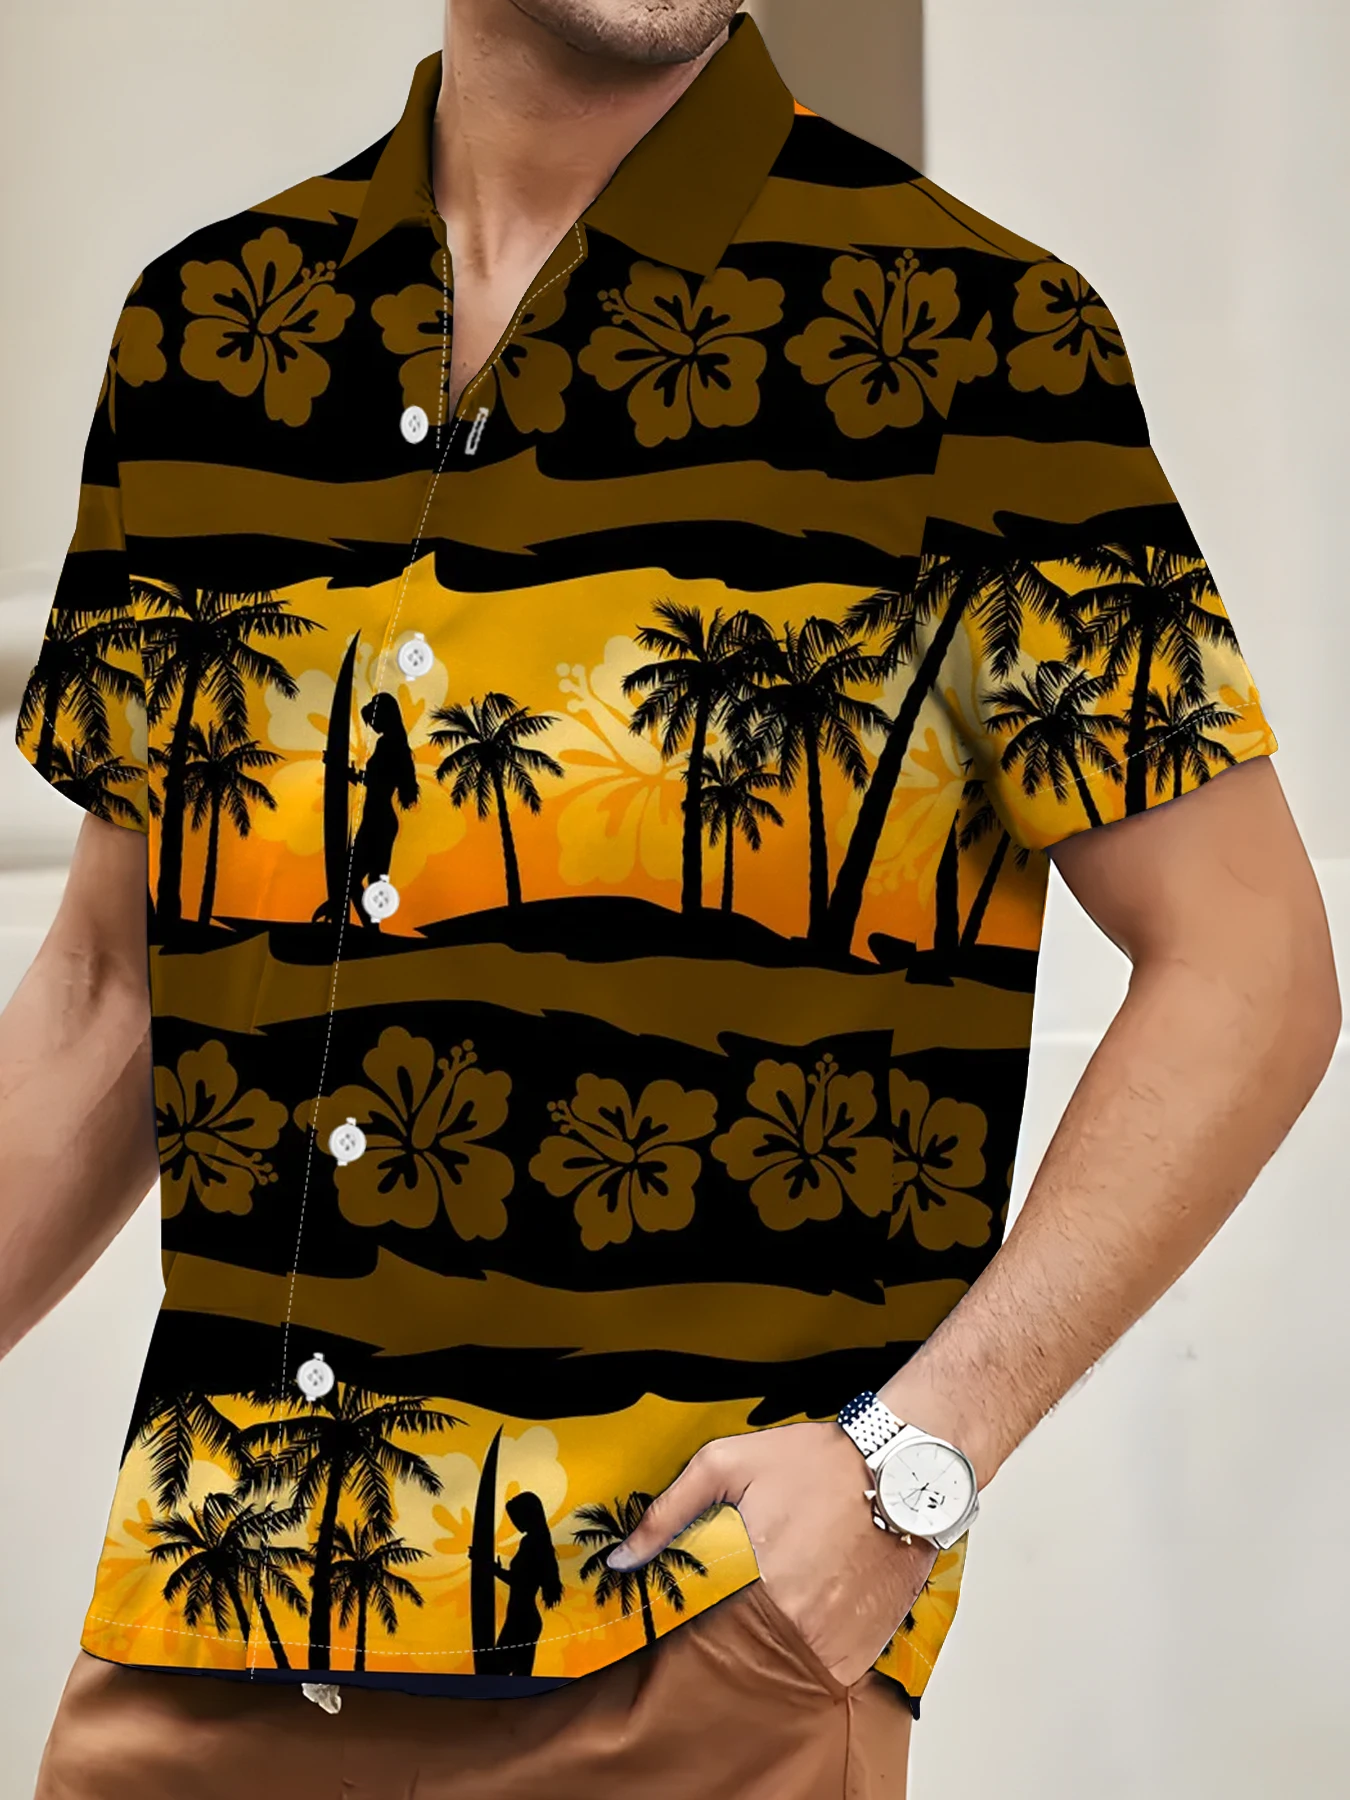 

Hawaiian Shirt Men's Shirts Tops 3d Printed Coconut Tree Graphic Button Down Shirts Short Sleeve Beach Vacation Men's Clothing